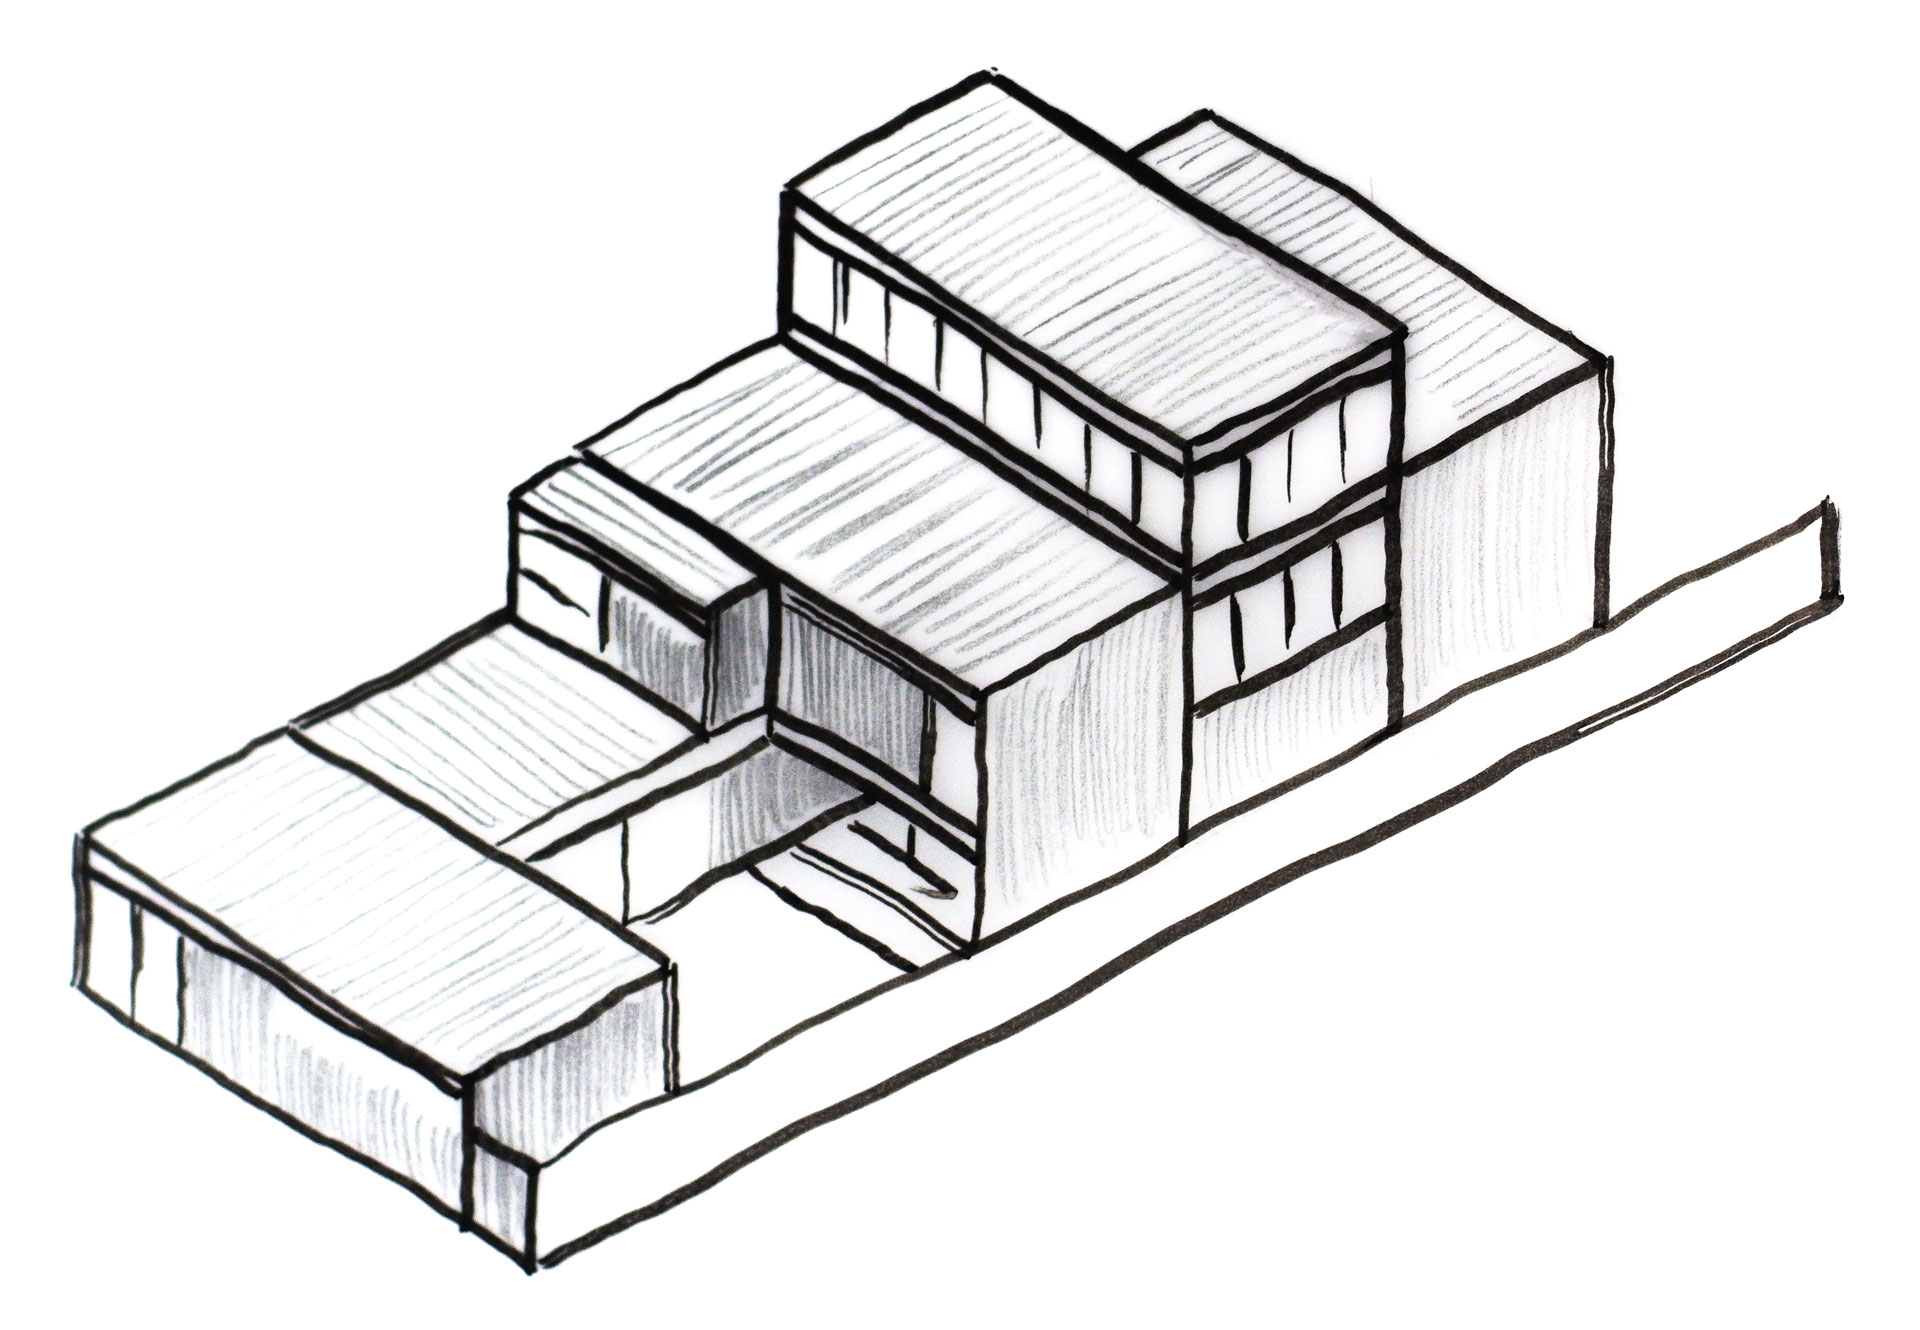 A tracing of Pierre Koenig’s aerial view of Koenig House 2 (1985)